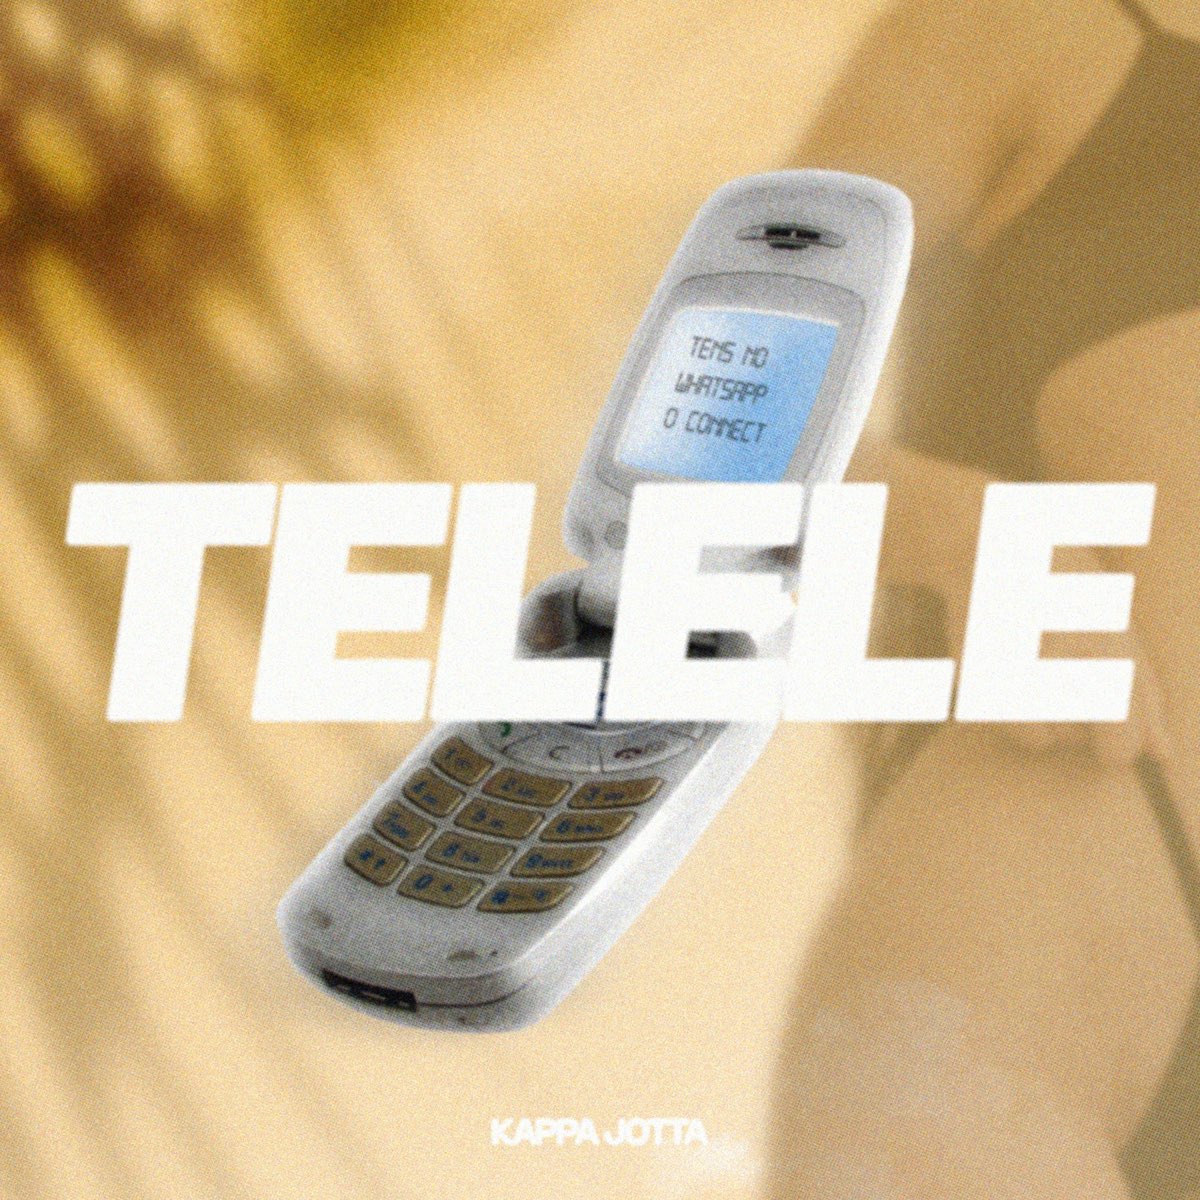 TELELE - Single - Album by Kappa Jotta - Apple Music